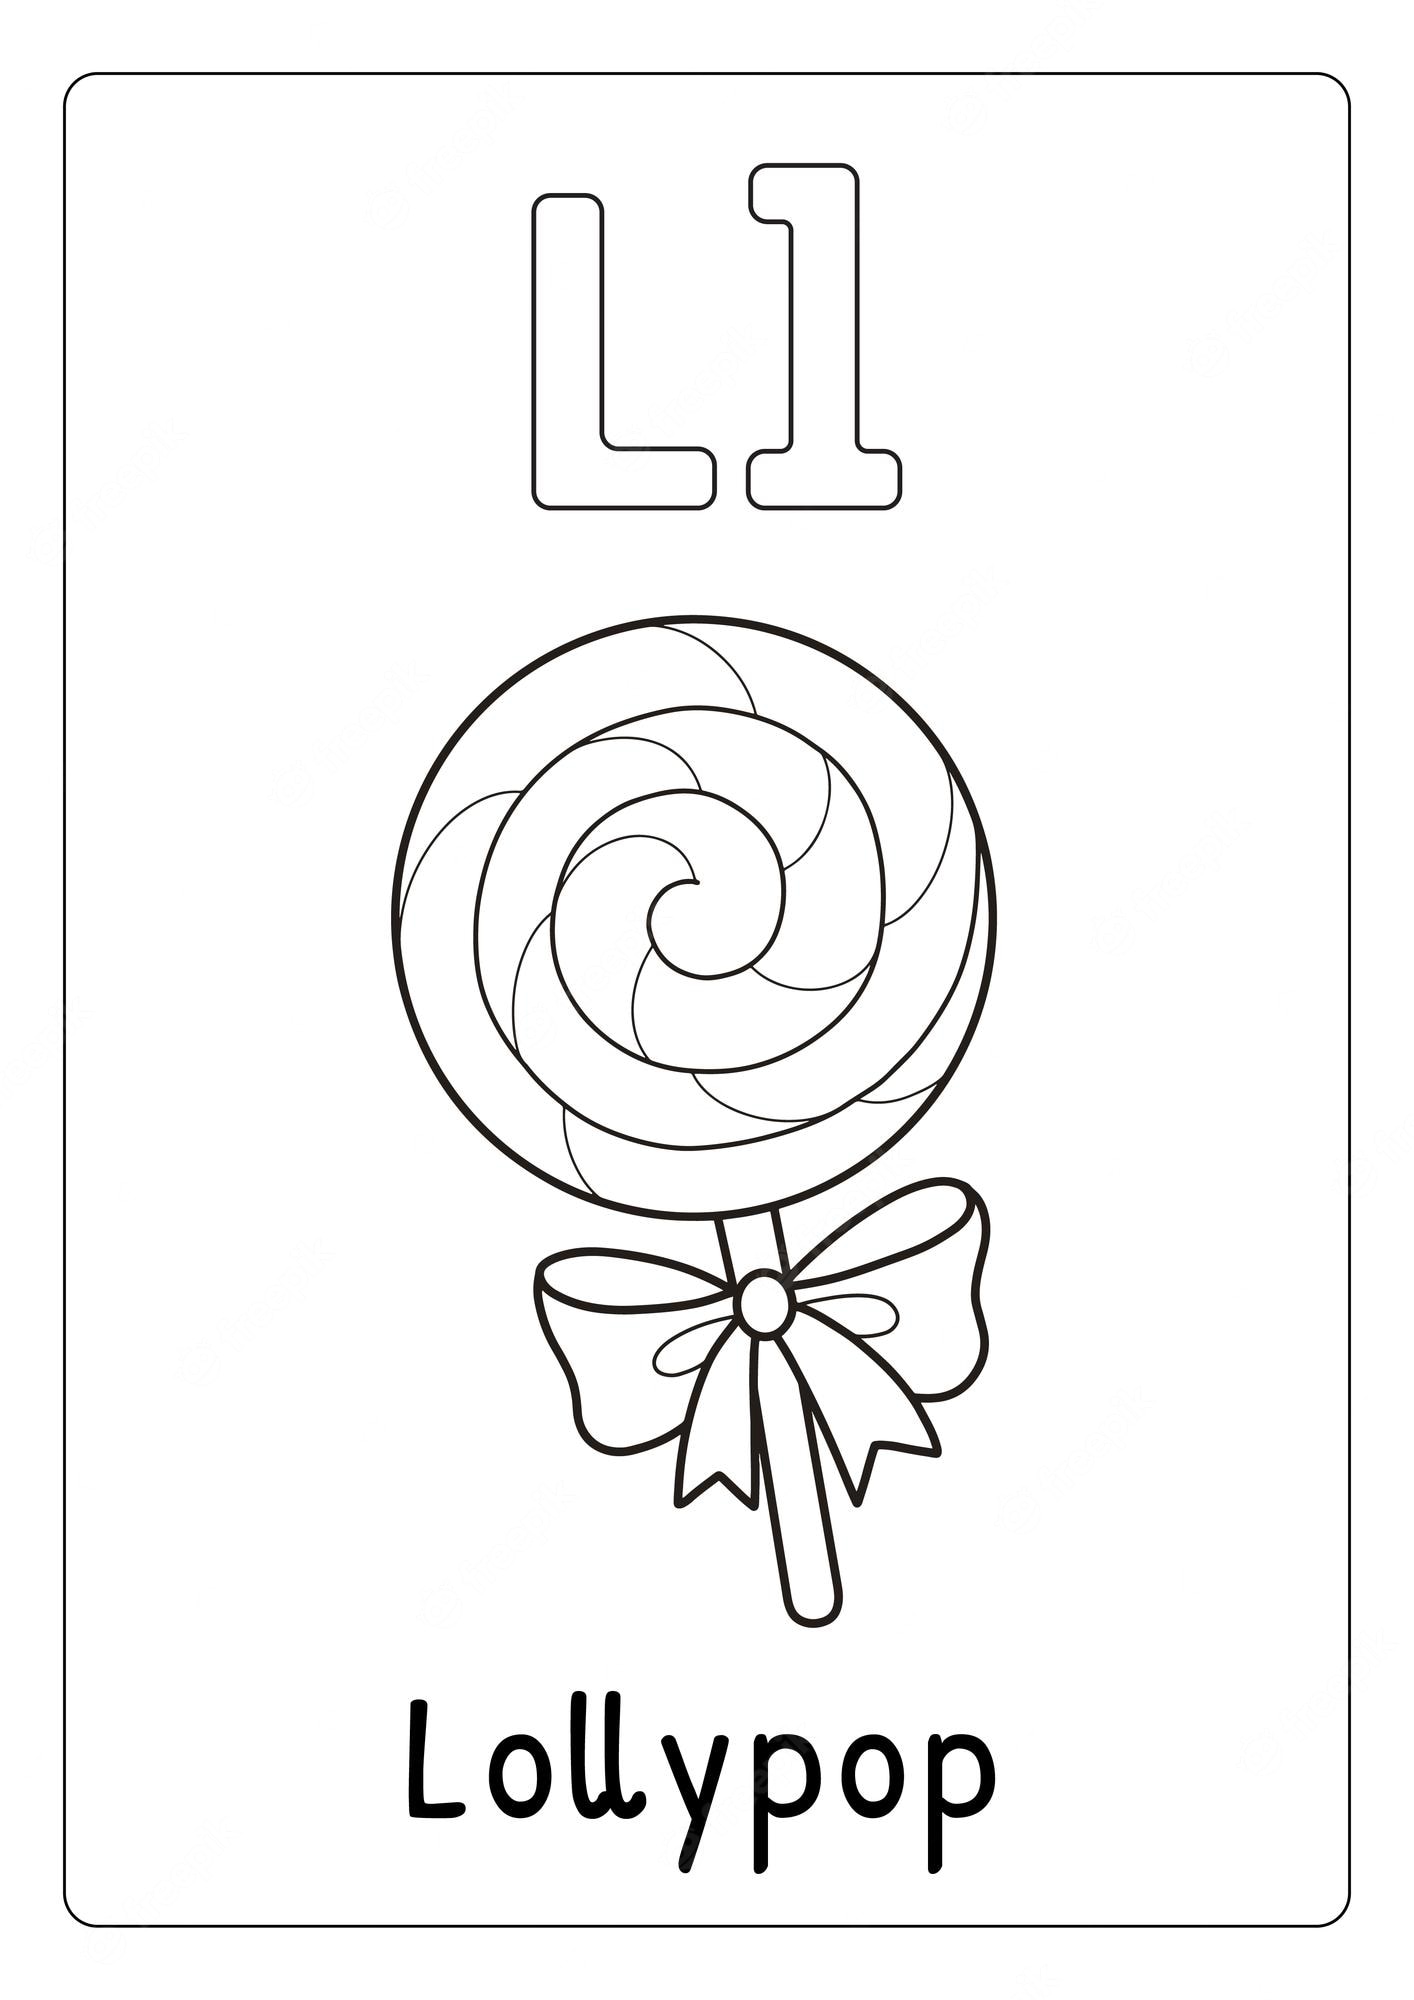 Premium Vector | Alphabet letter l for lollypop coloring page for kids